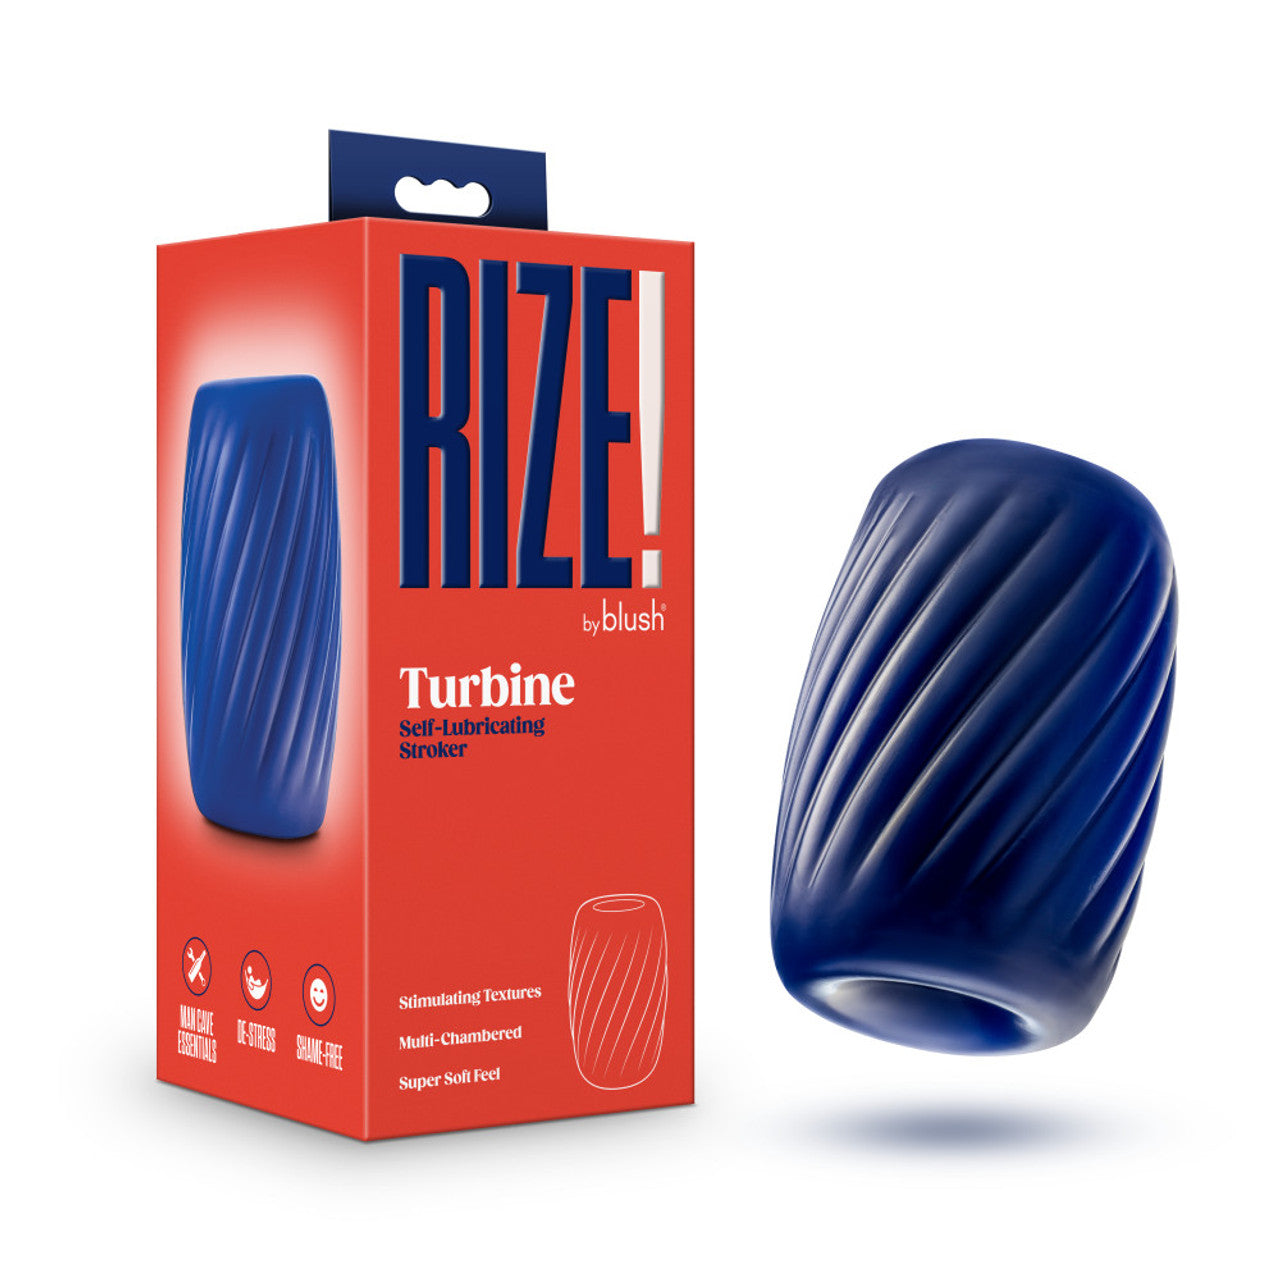 Rize Turbine Self-Lubricating Stroker - Blue